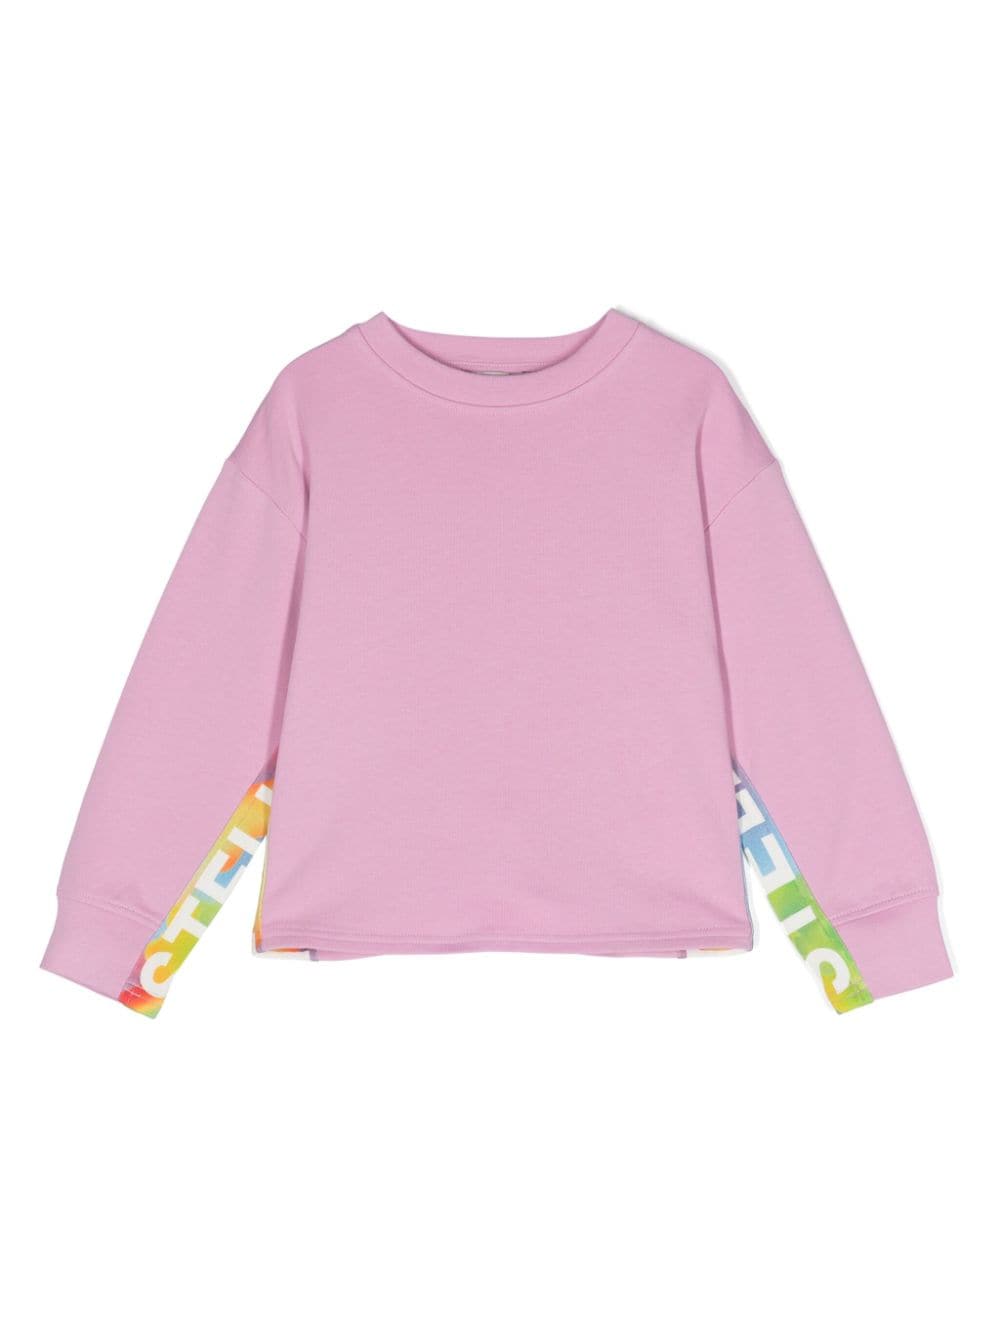 Pink sweatshirt for girls with logo